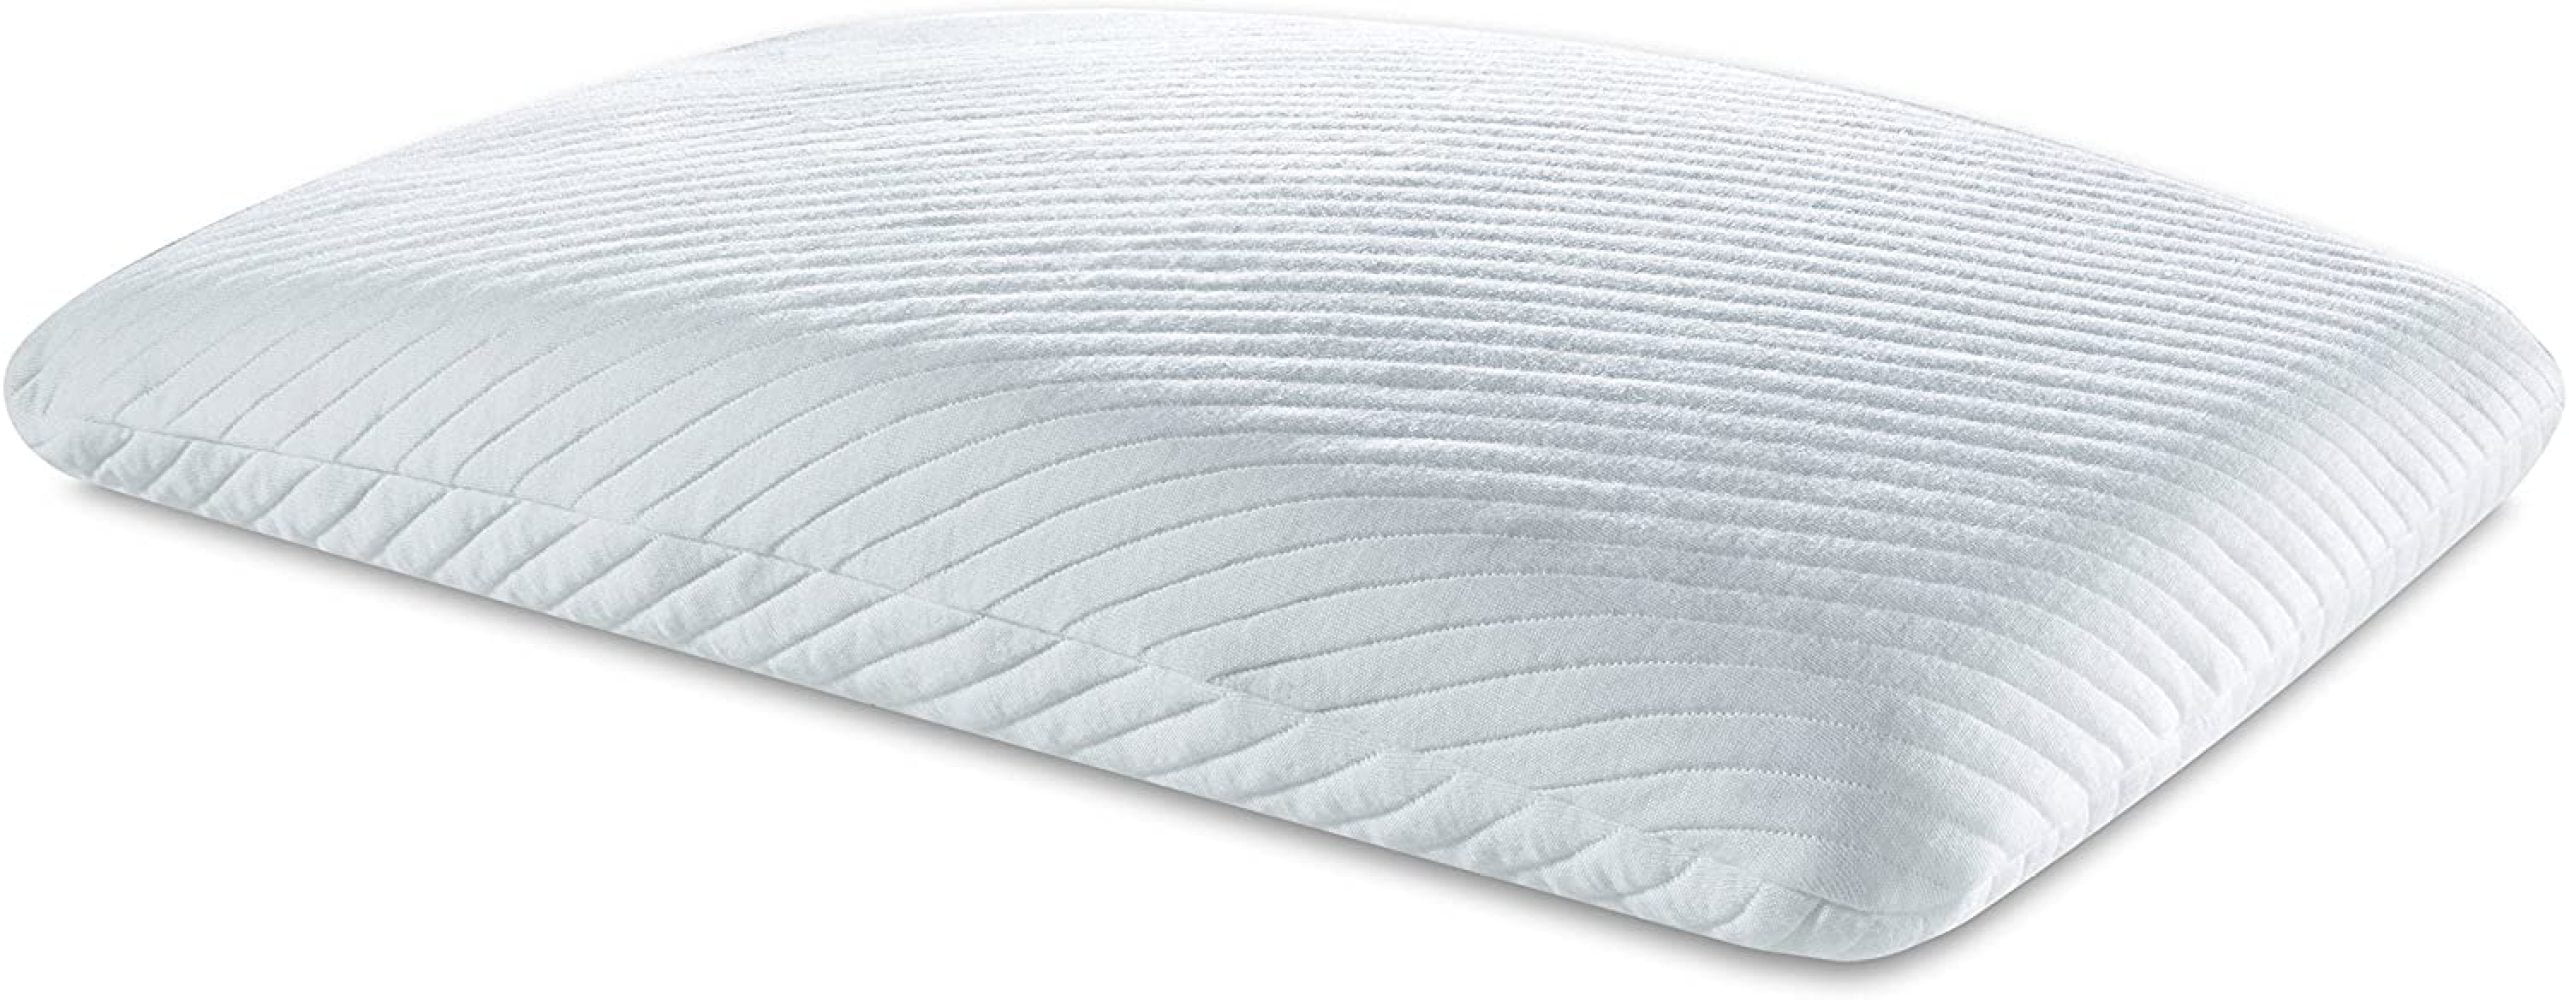 one pillow TEMPUR-Pedic TEMPUR-Essential Support pillow 